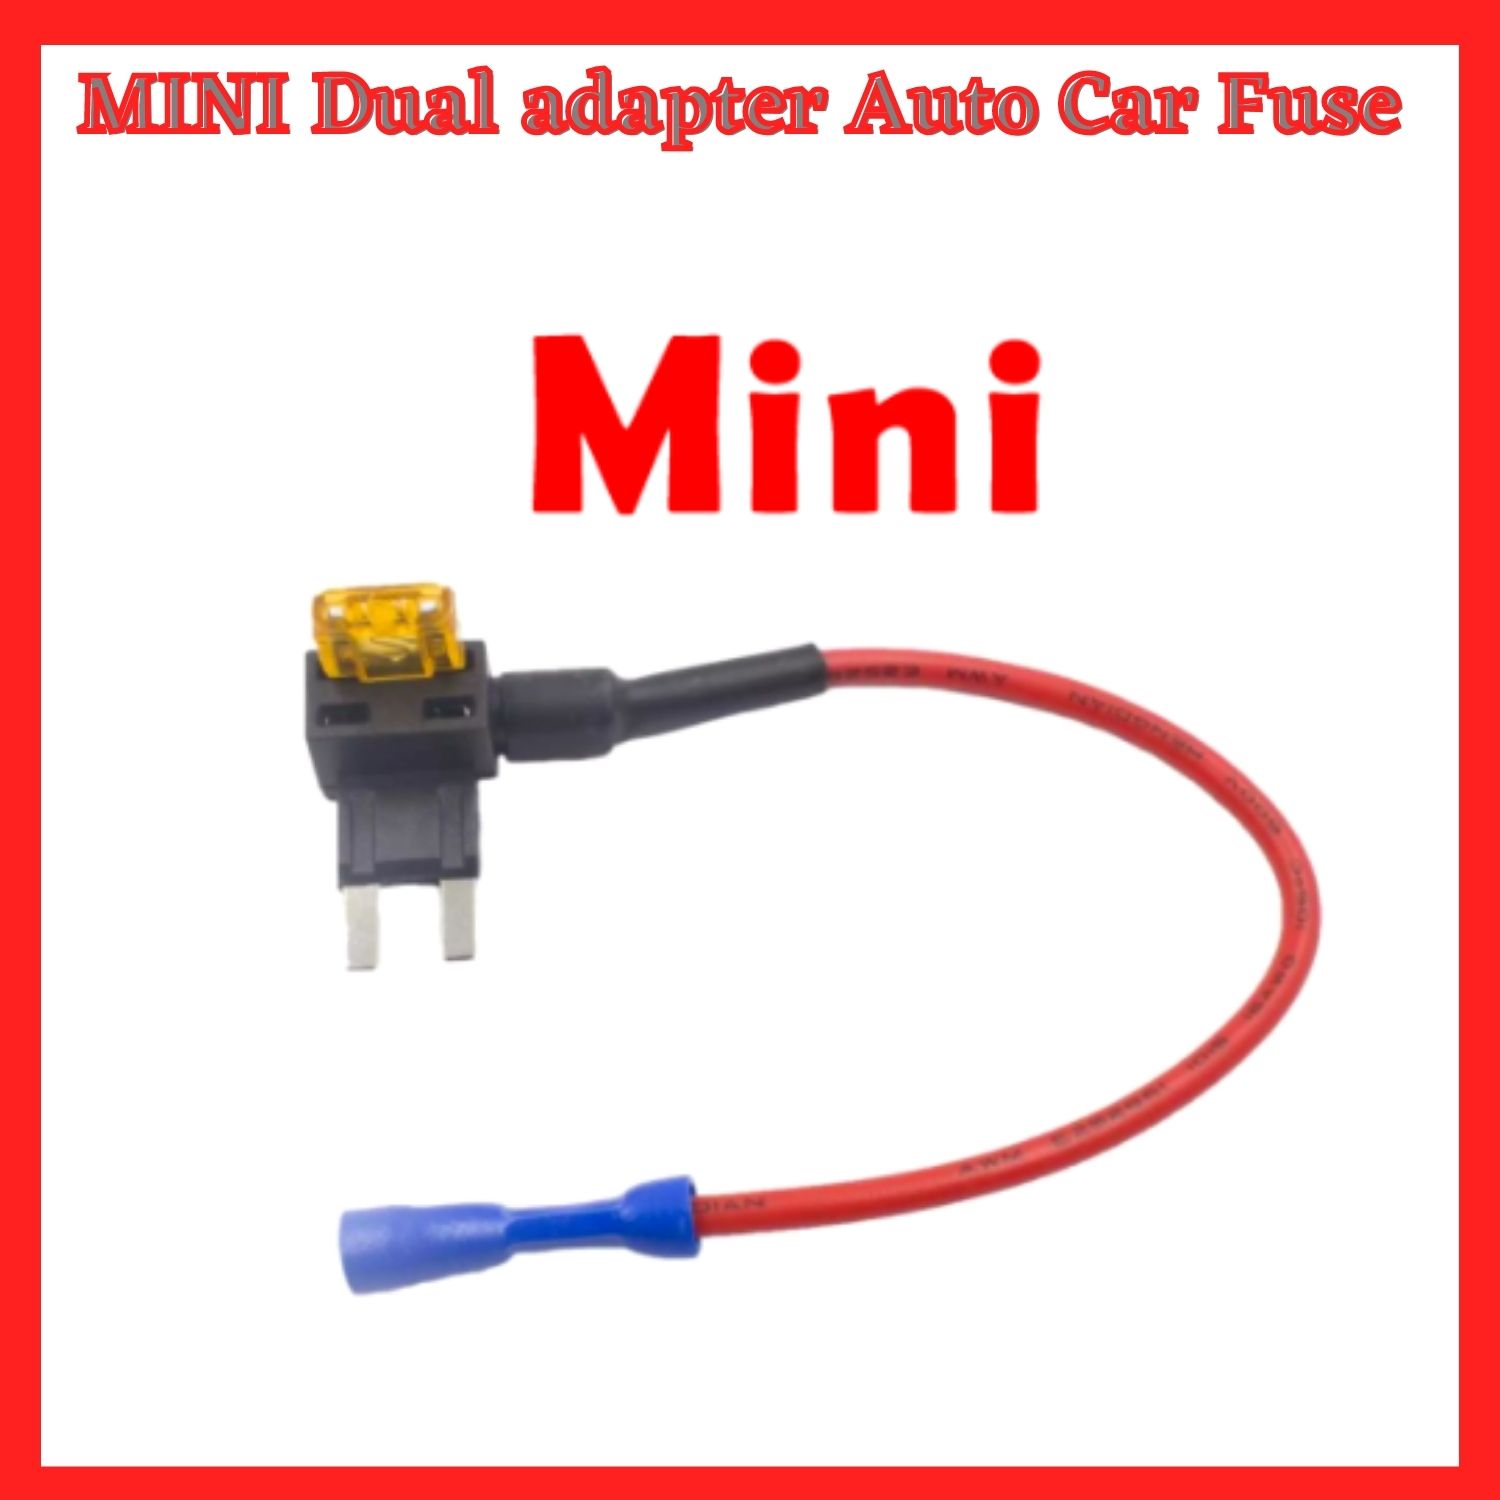 Auto Car Add a Circuit/ Add a Fuse Mini Low Profile ATM TAP Fuse Holder Automotive 